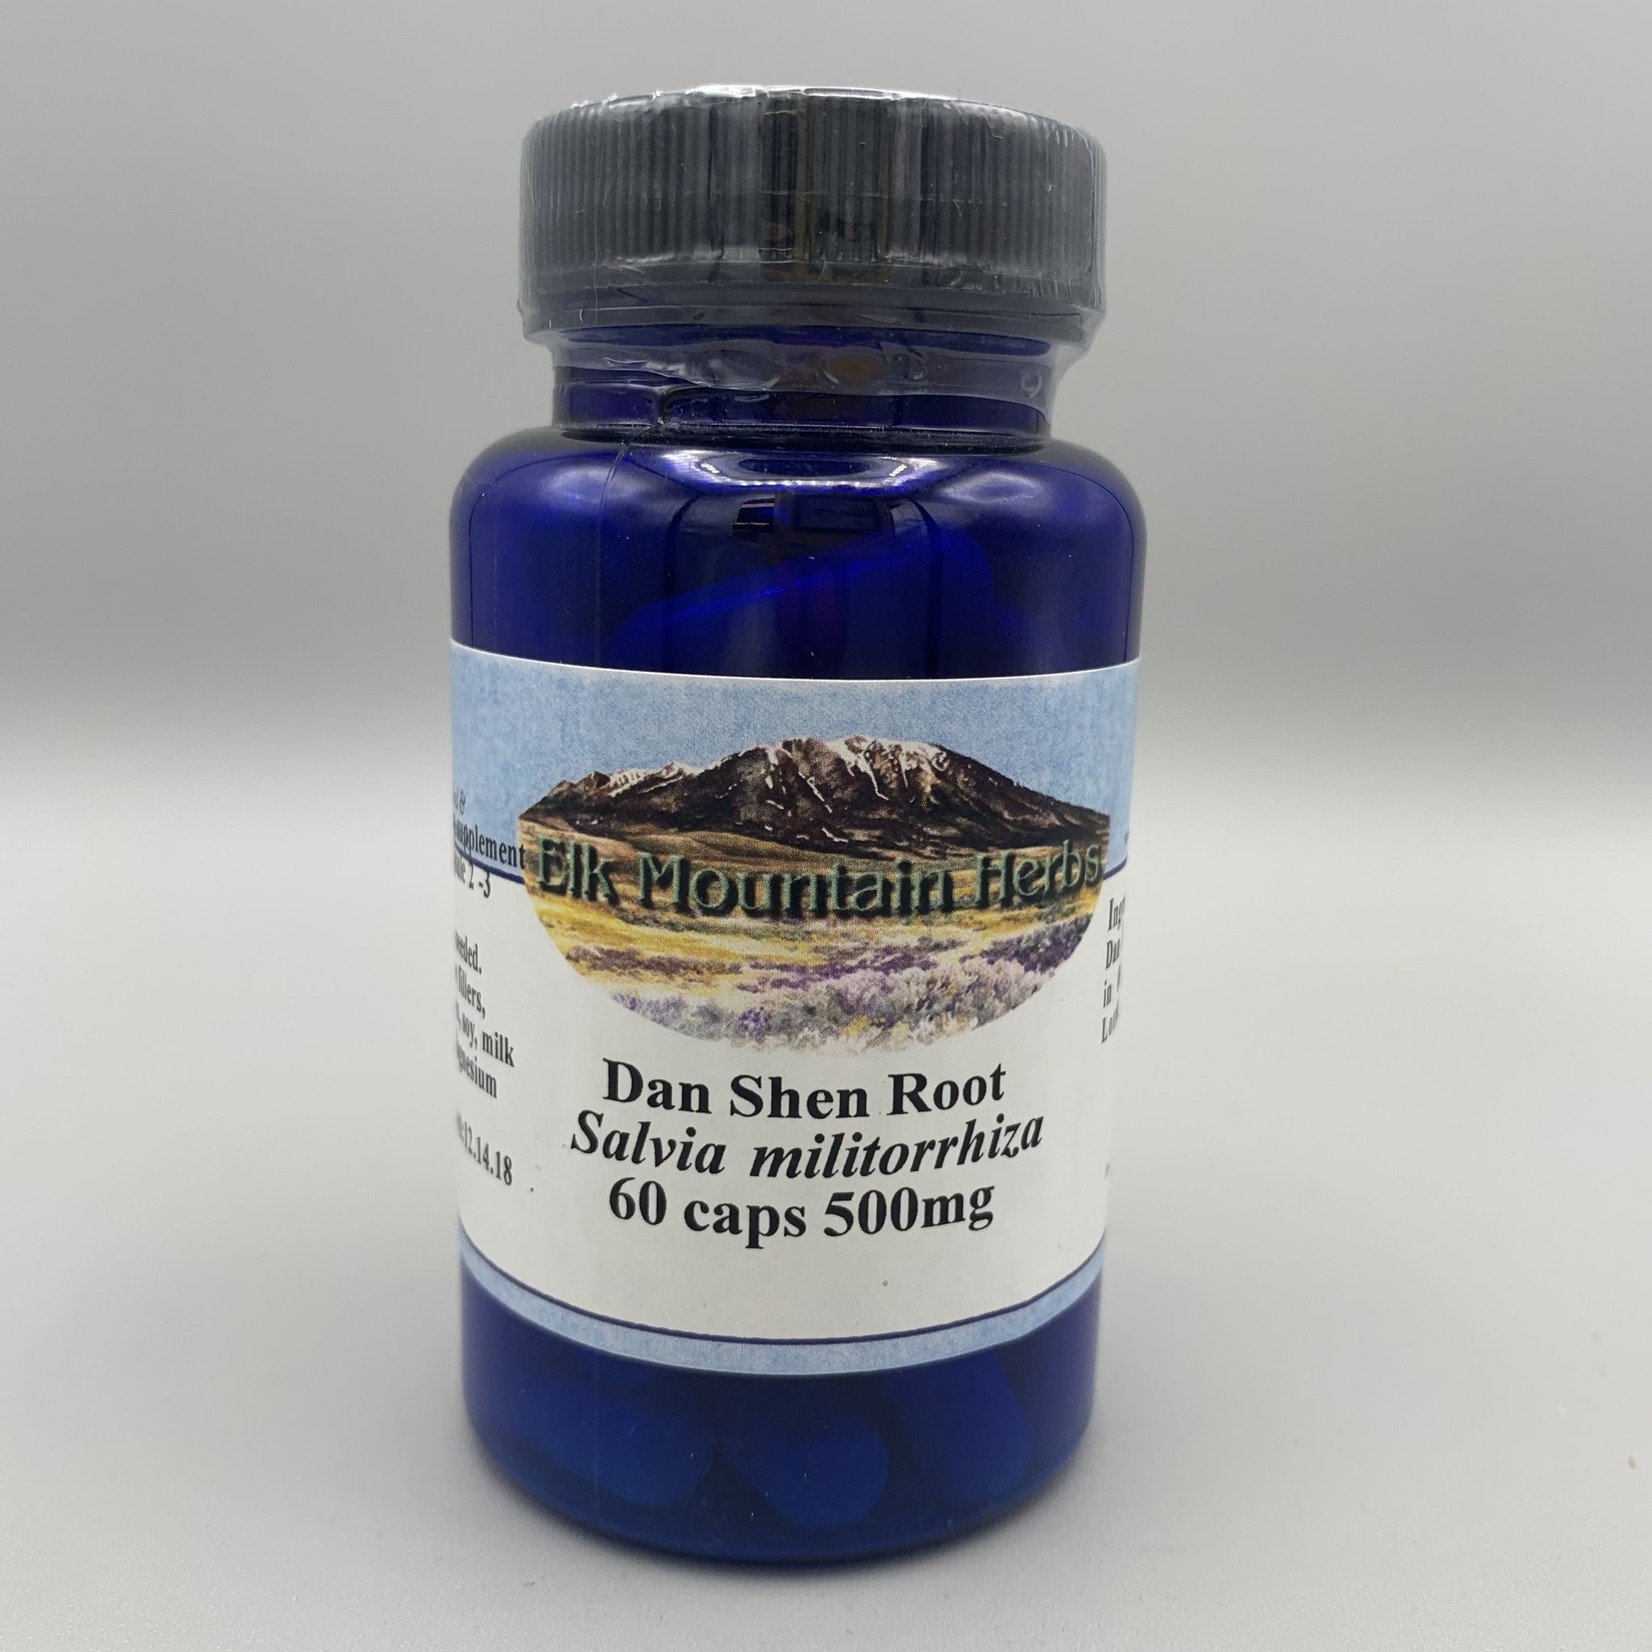 Elk Mountain Herbs EMH: Veg Capsules, Dan Shen Root (Salvia militorrhiza) - 500 mg, 60ct.